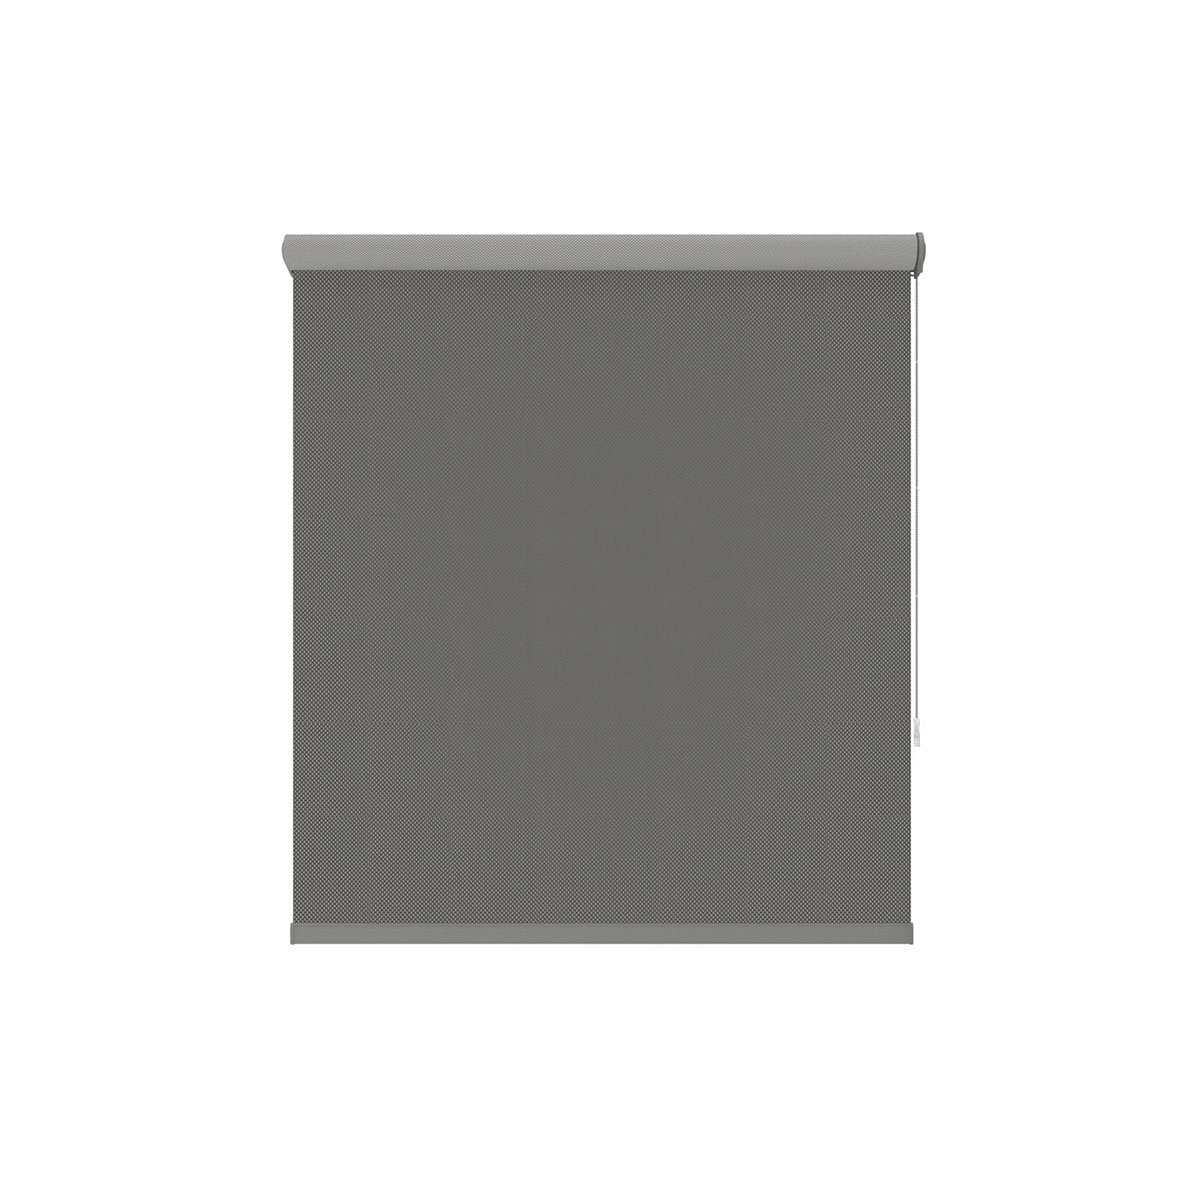 Persiana Enrollable Translucida Screen Phifer 4500 New 0.80 X 2.50 Granite Classic